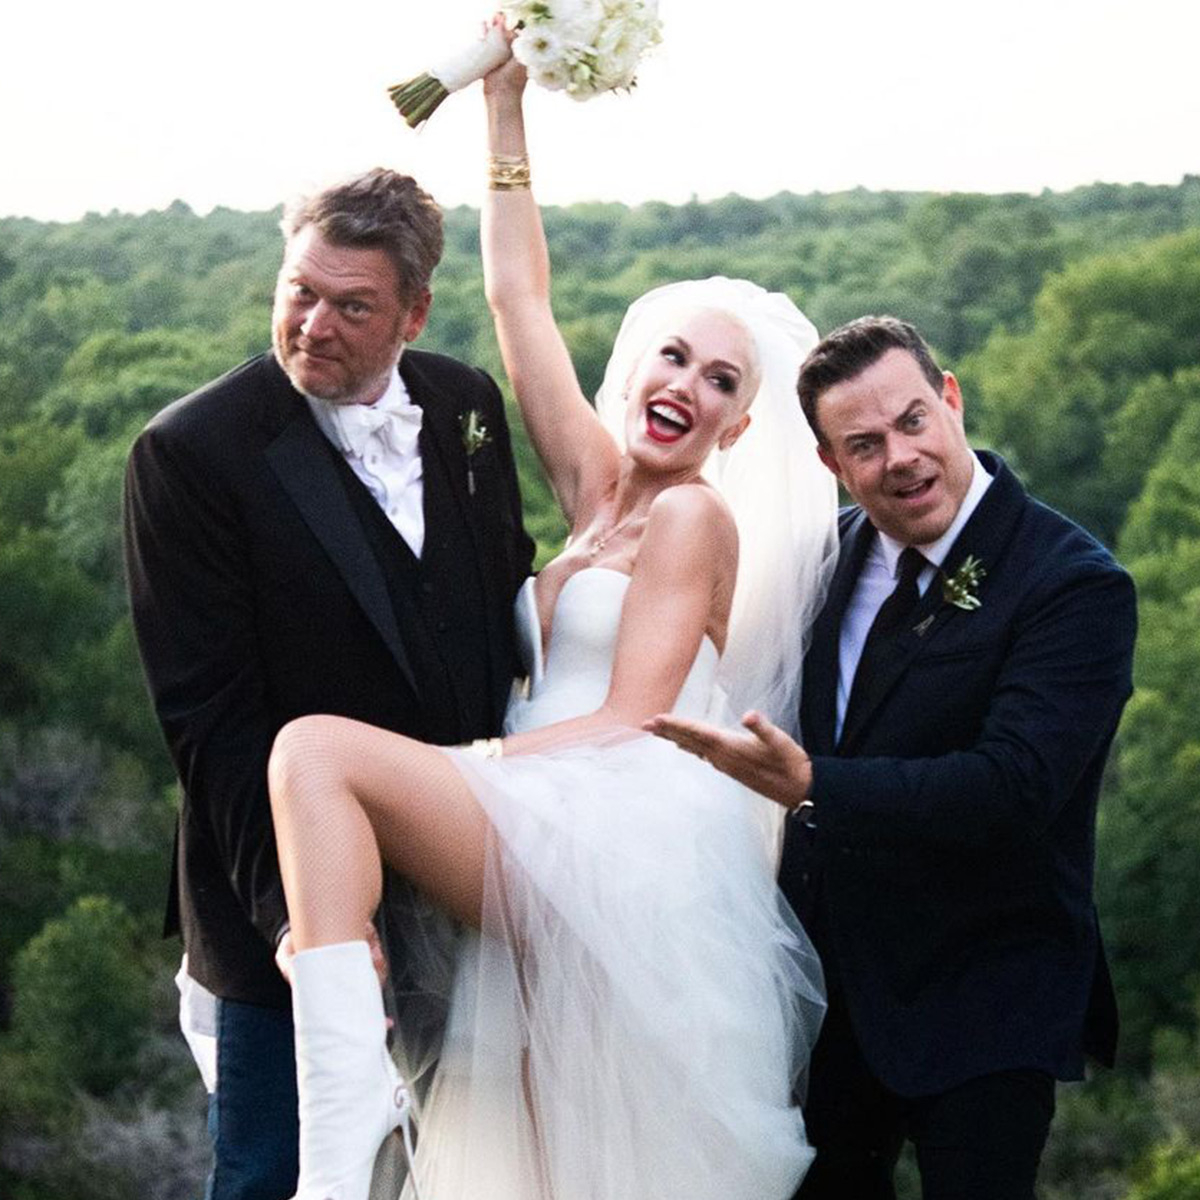 Photos from Inside Blake Shelton and Gwen Stefani's Wedding E! Online